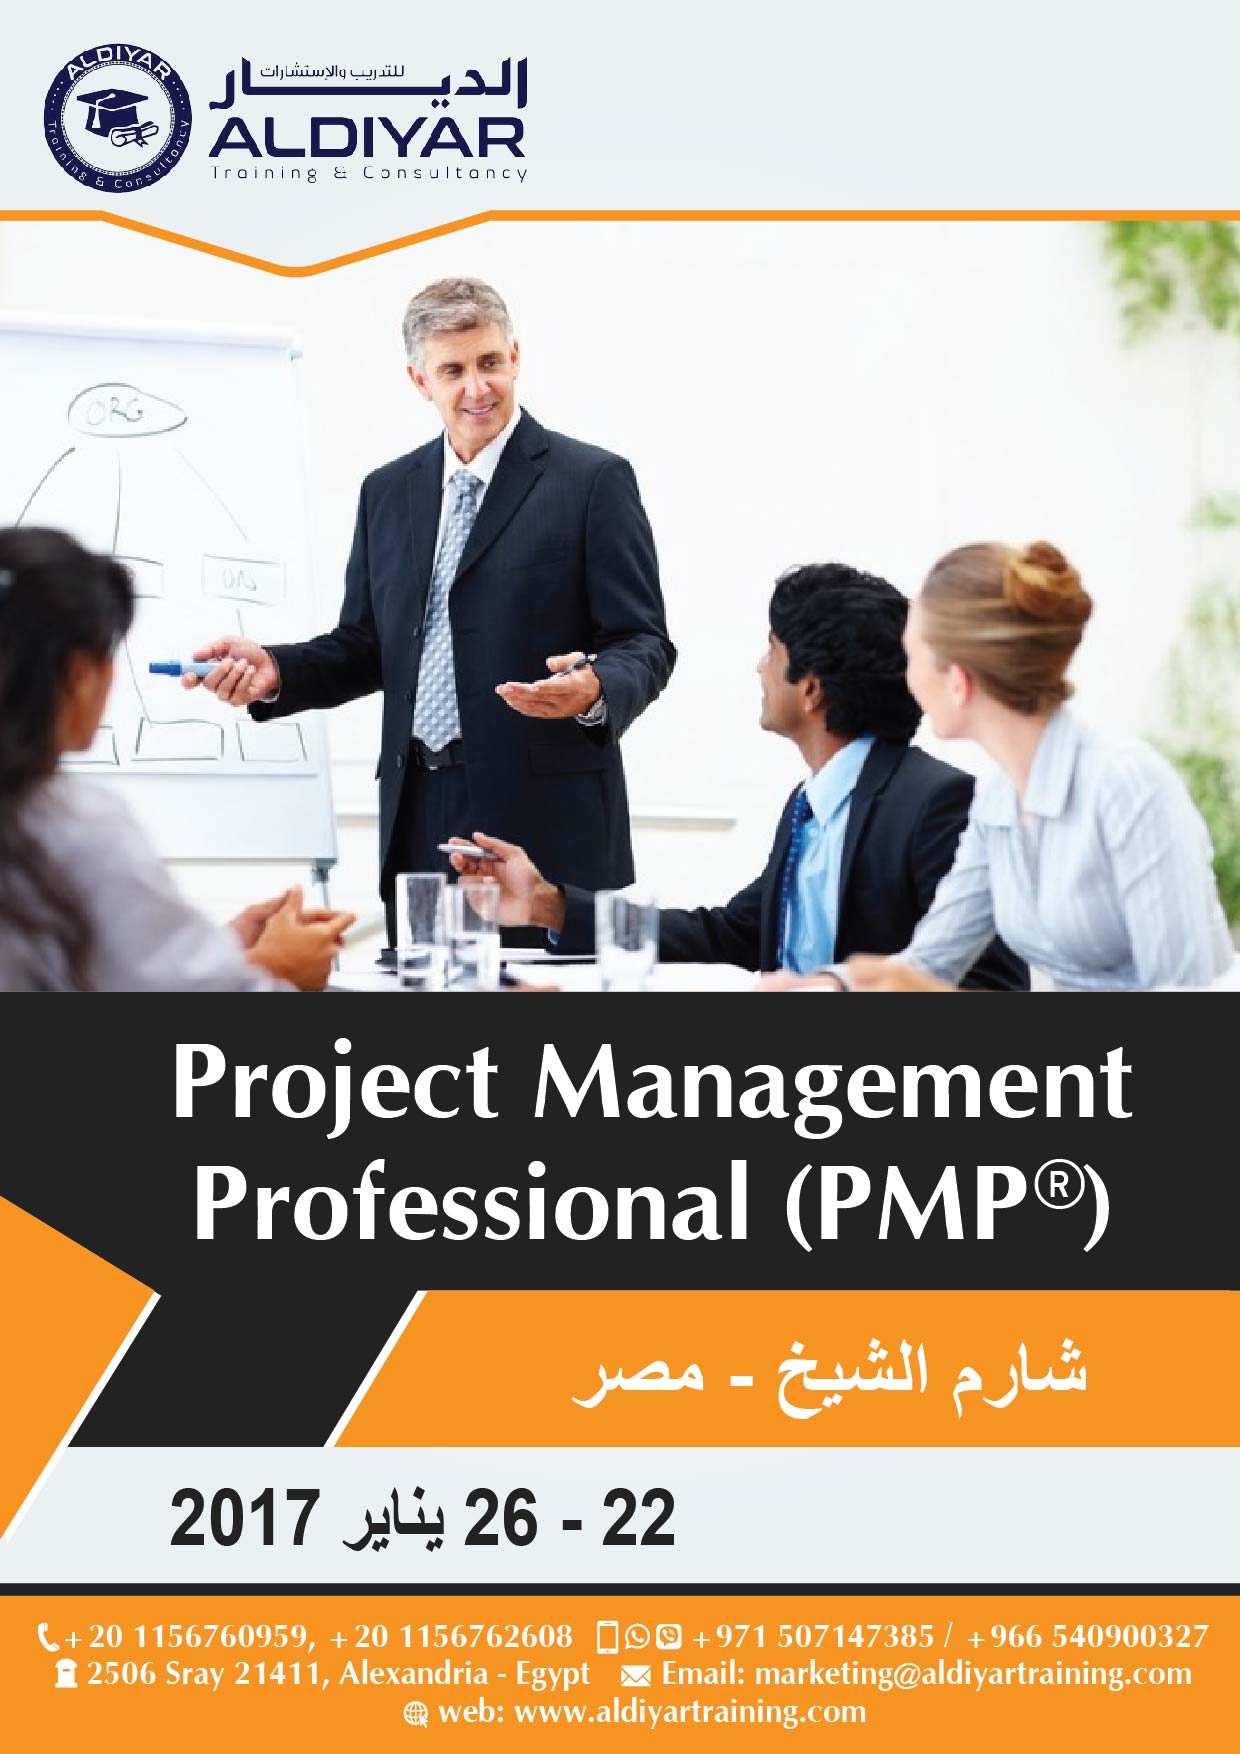 :  Project Management Professional (PMP)-01.jpg
: 660
:  224.4 